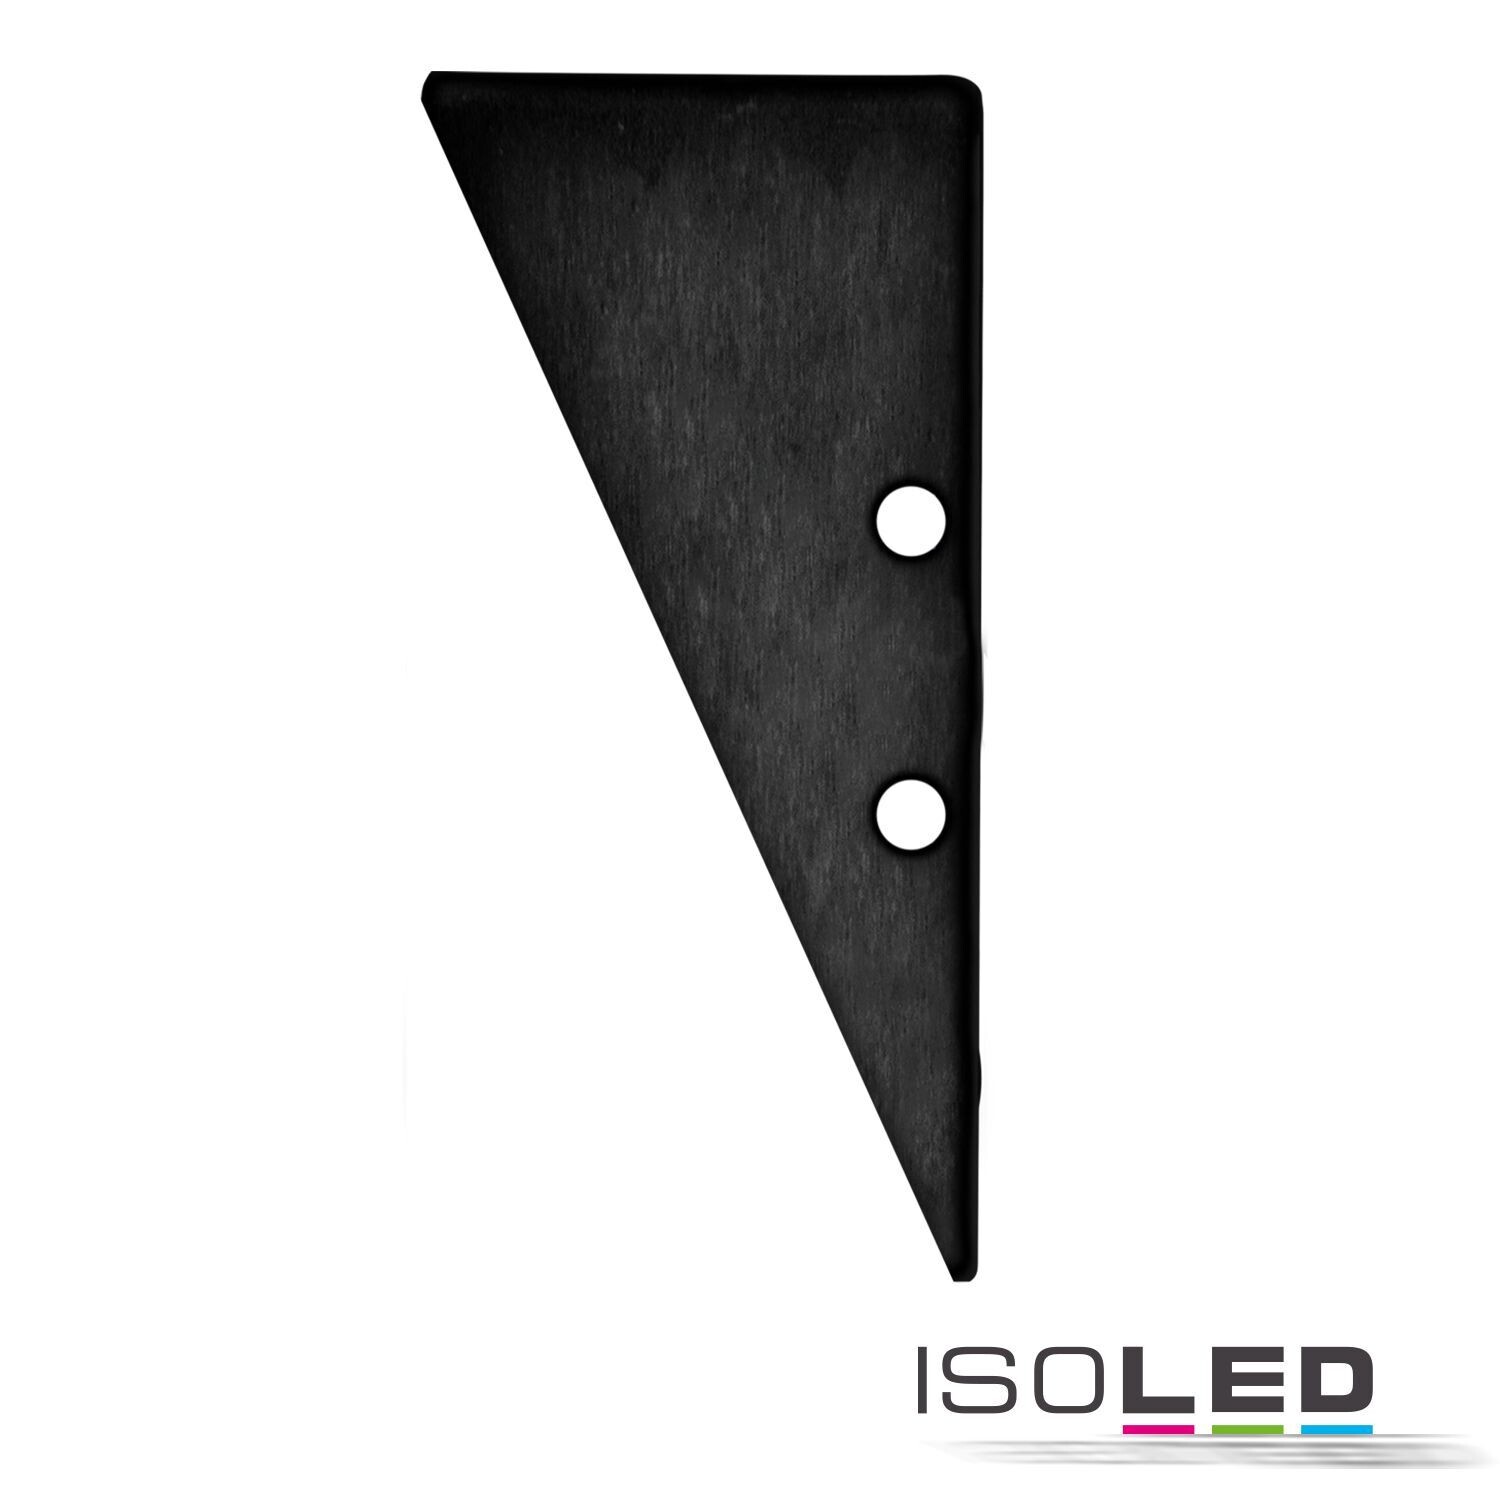 Endkappe für LED Profil Triangle schwarz